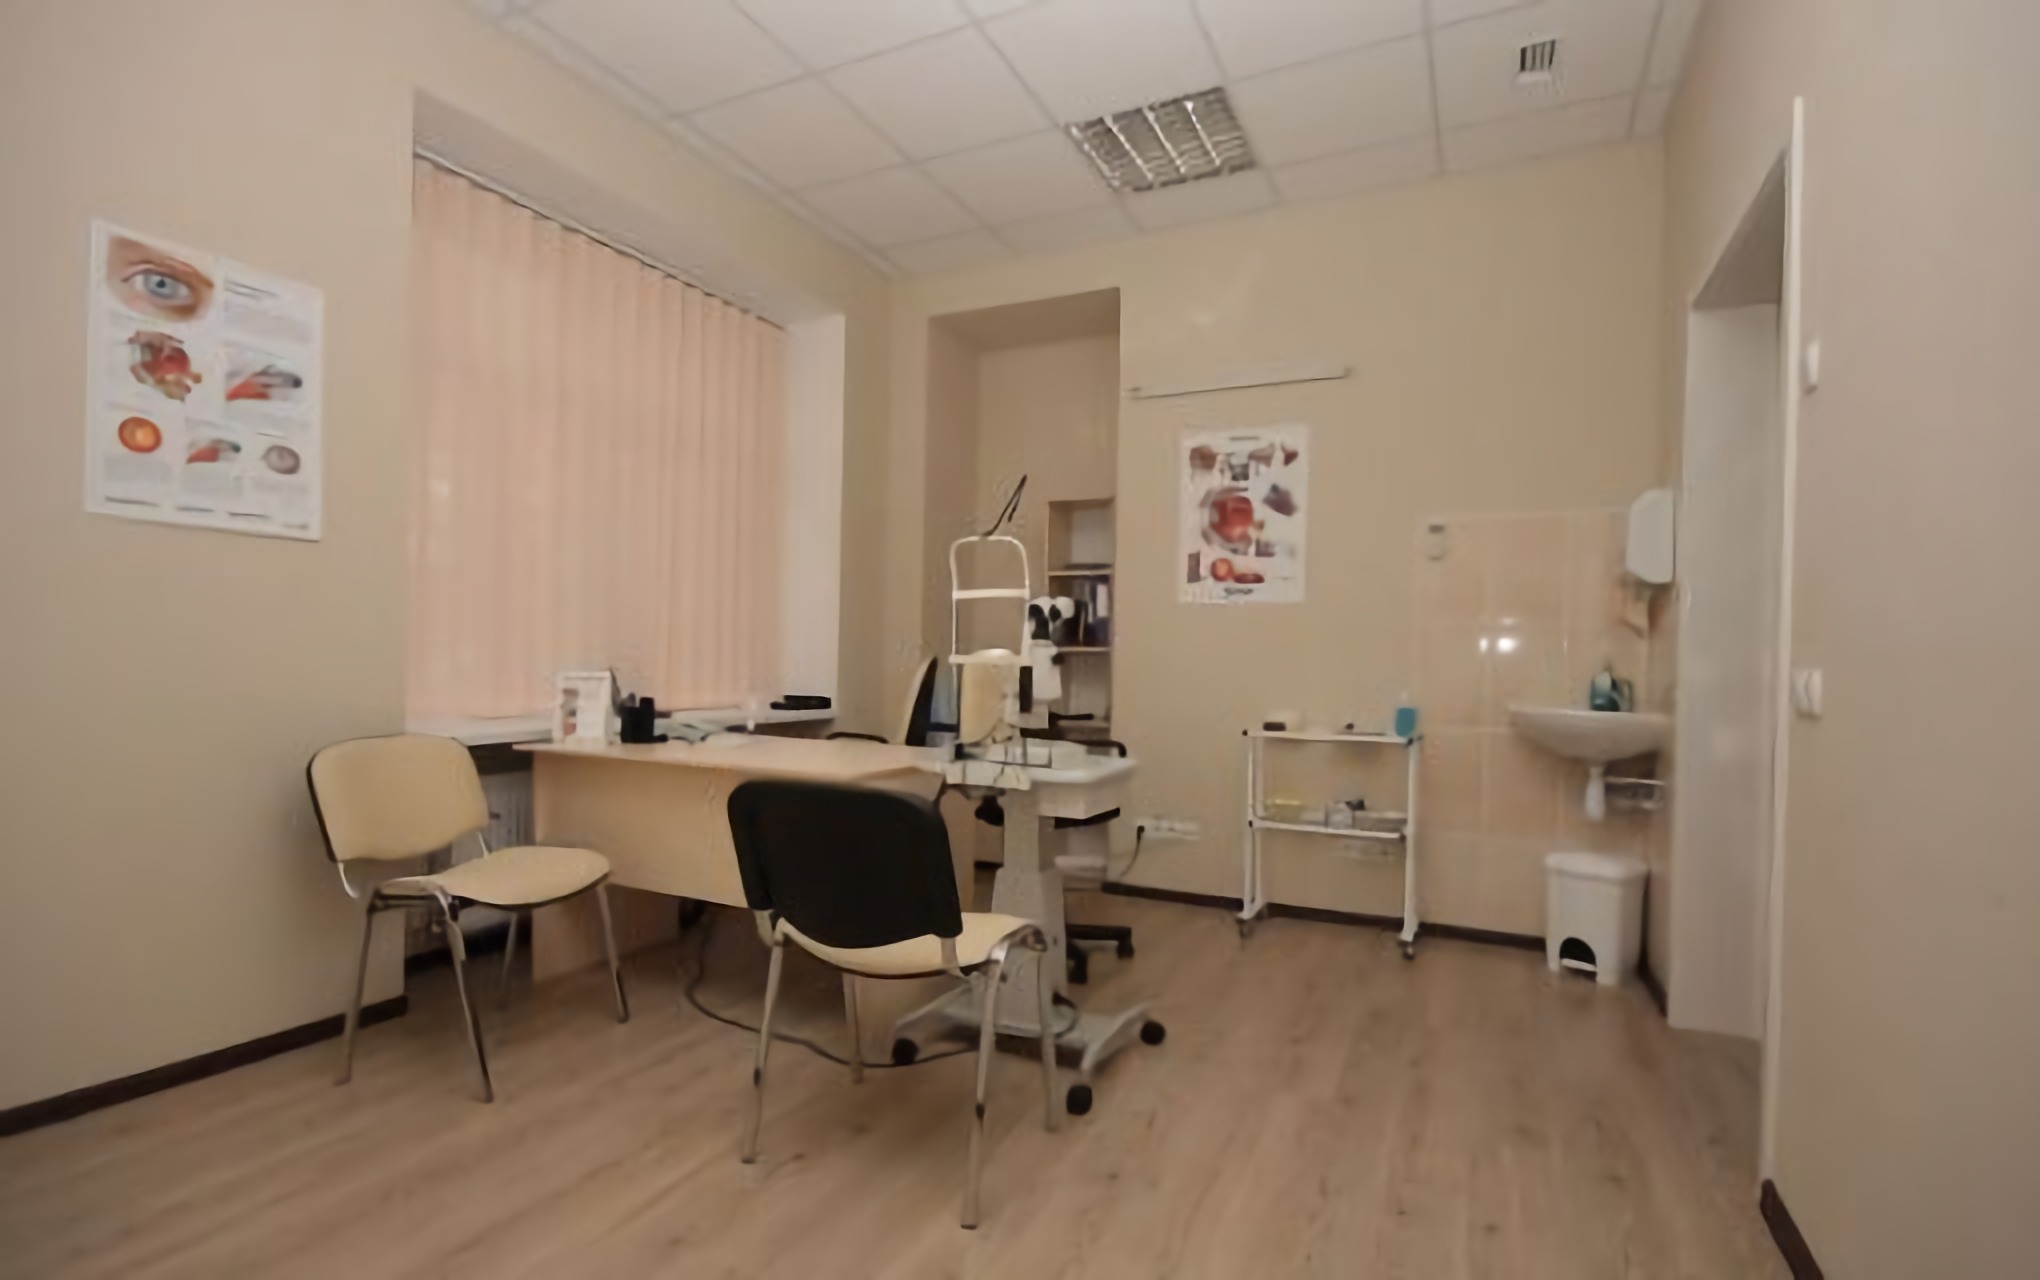 Gabinet oftalmologa w klinice Nowyj Zir Charków